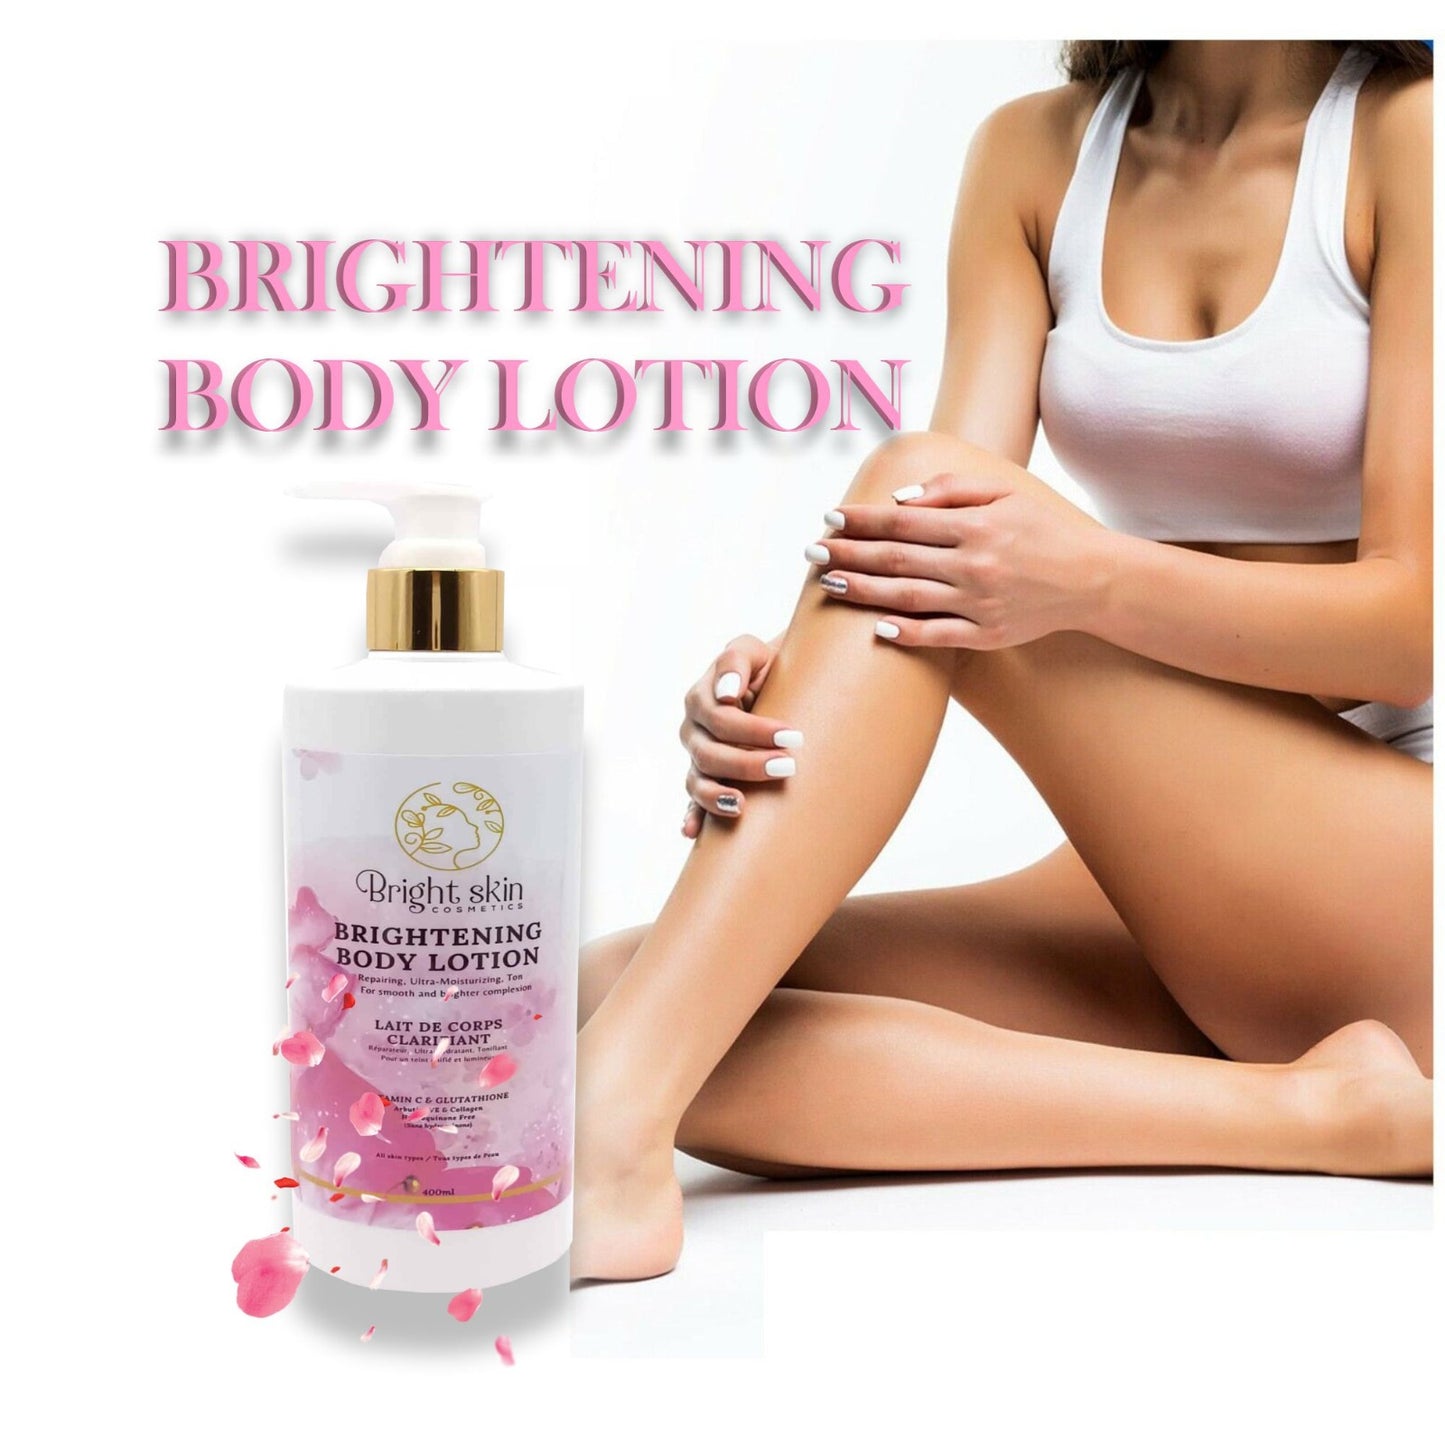 Brightening body lotion